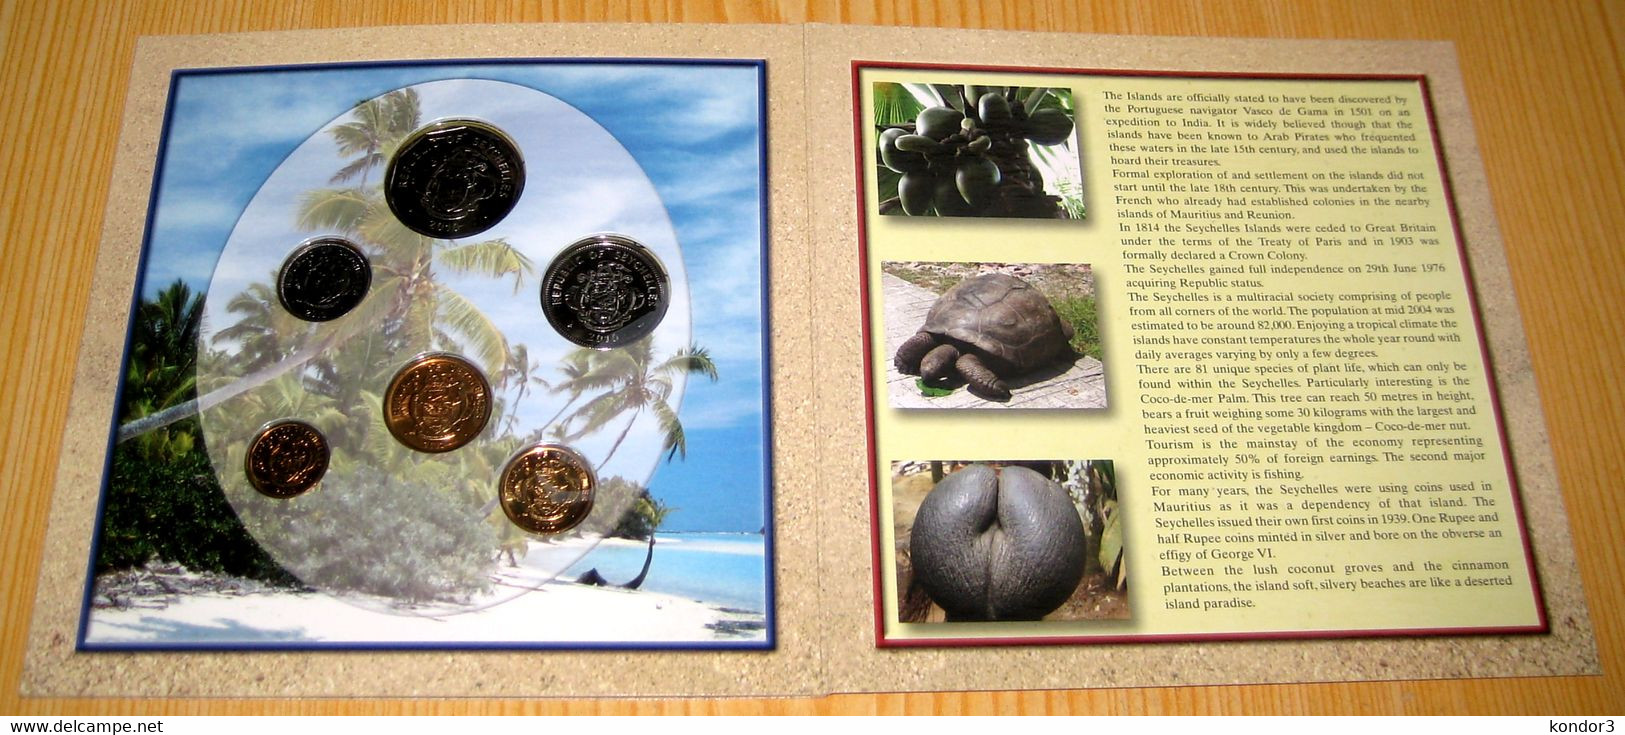 Seychelles. Brilliant Uncirculated Coin Collection - Seychellen